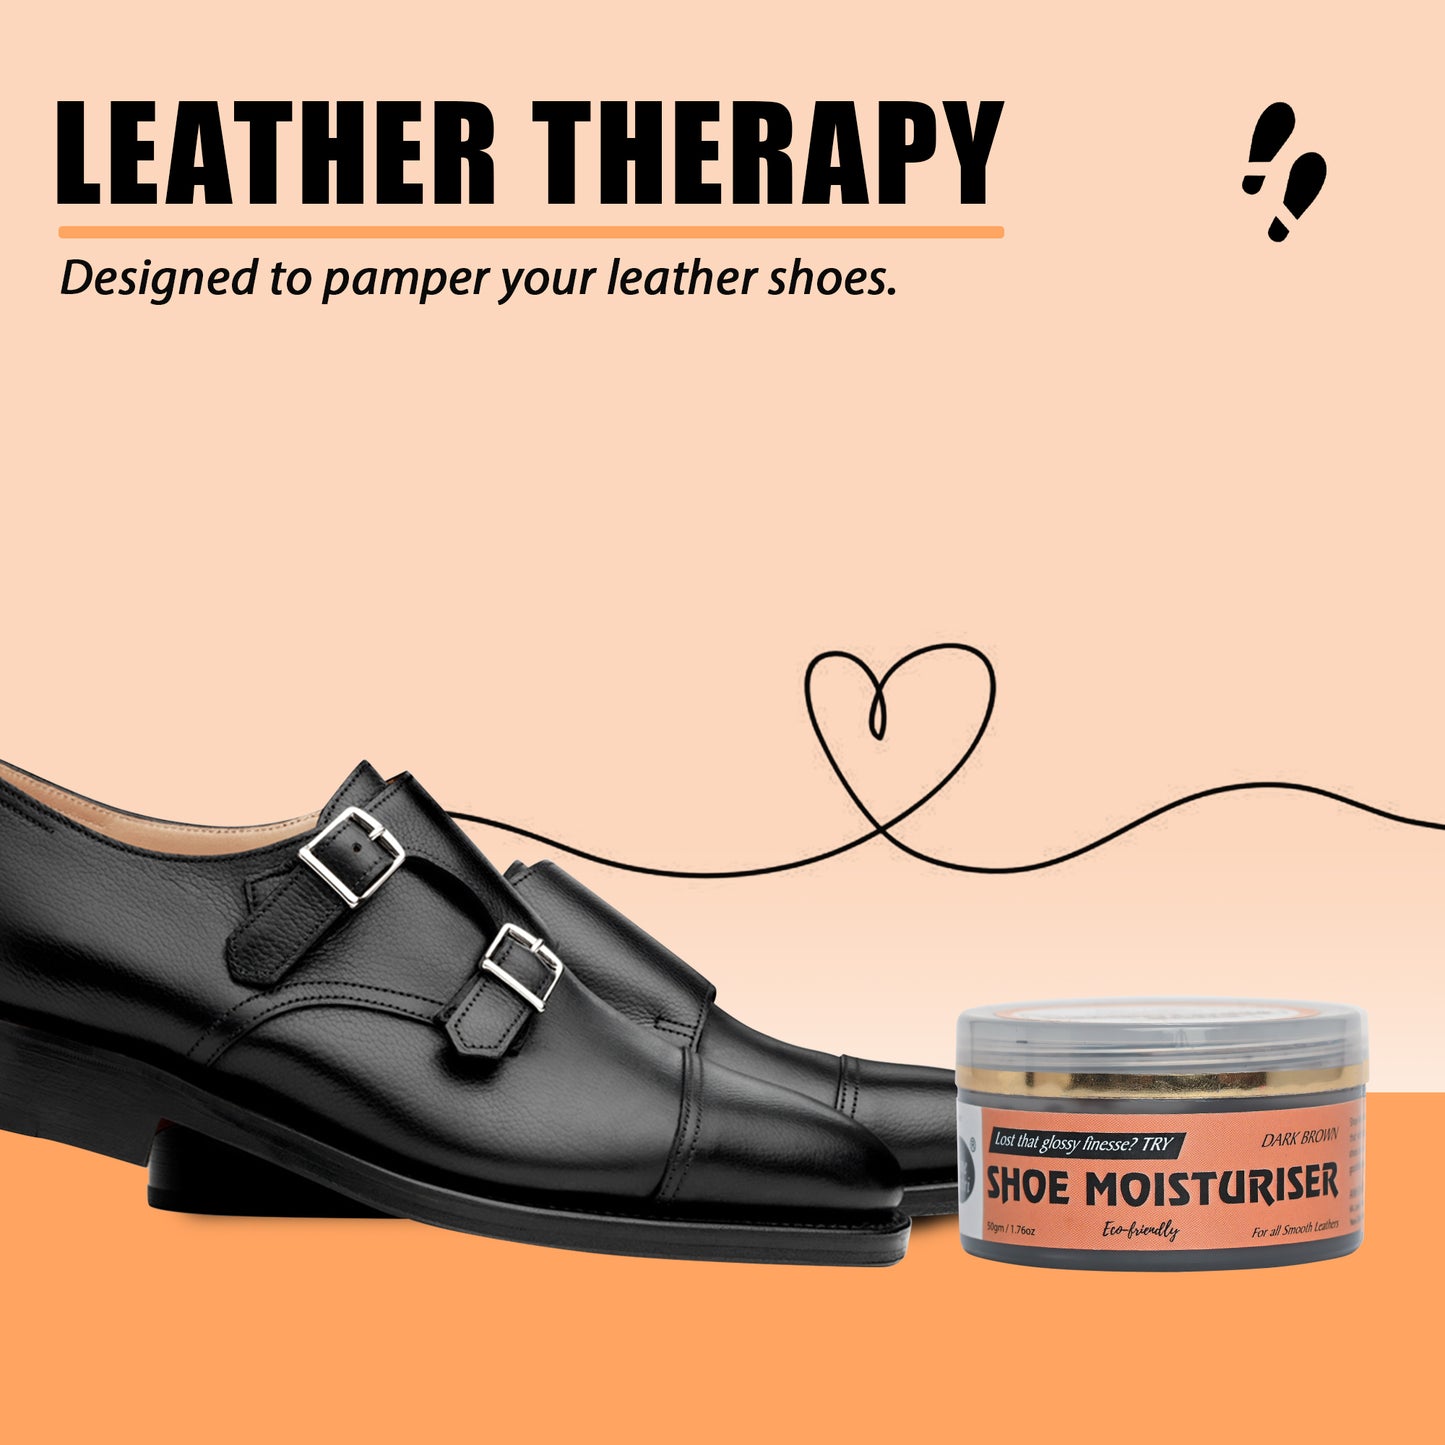 Shoe Mistri Shoe Moisturiser (Dark Brown)- Suitable for Soft Leathers